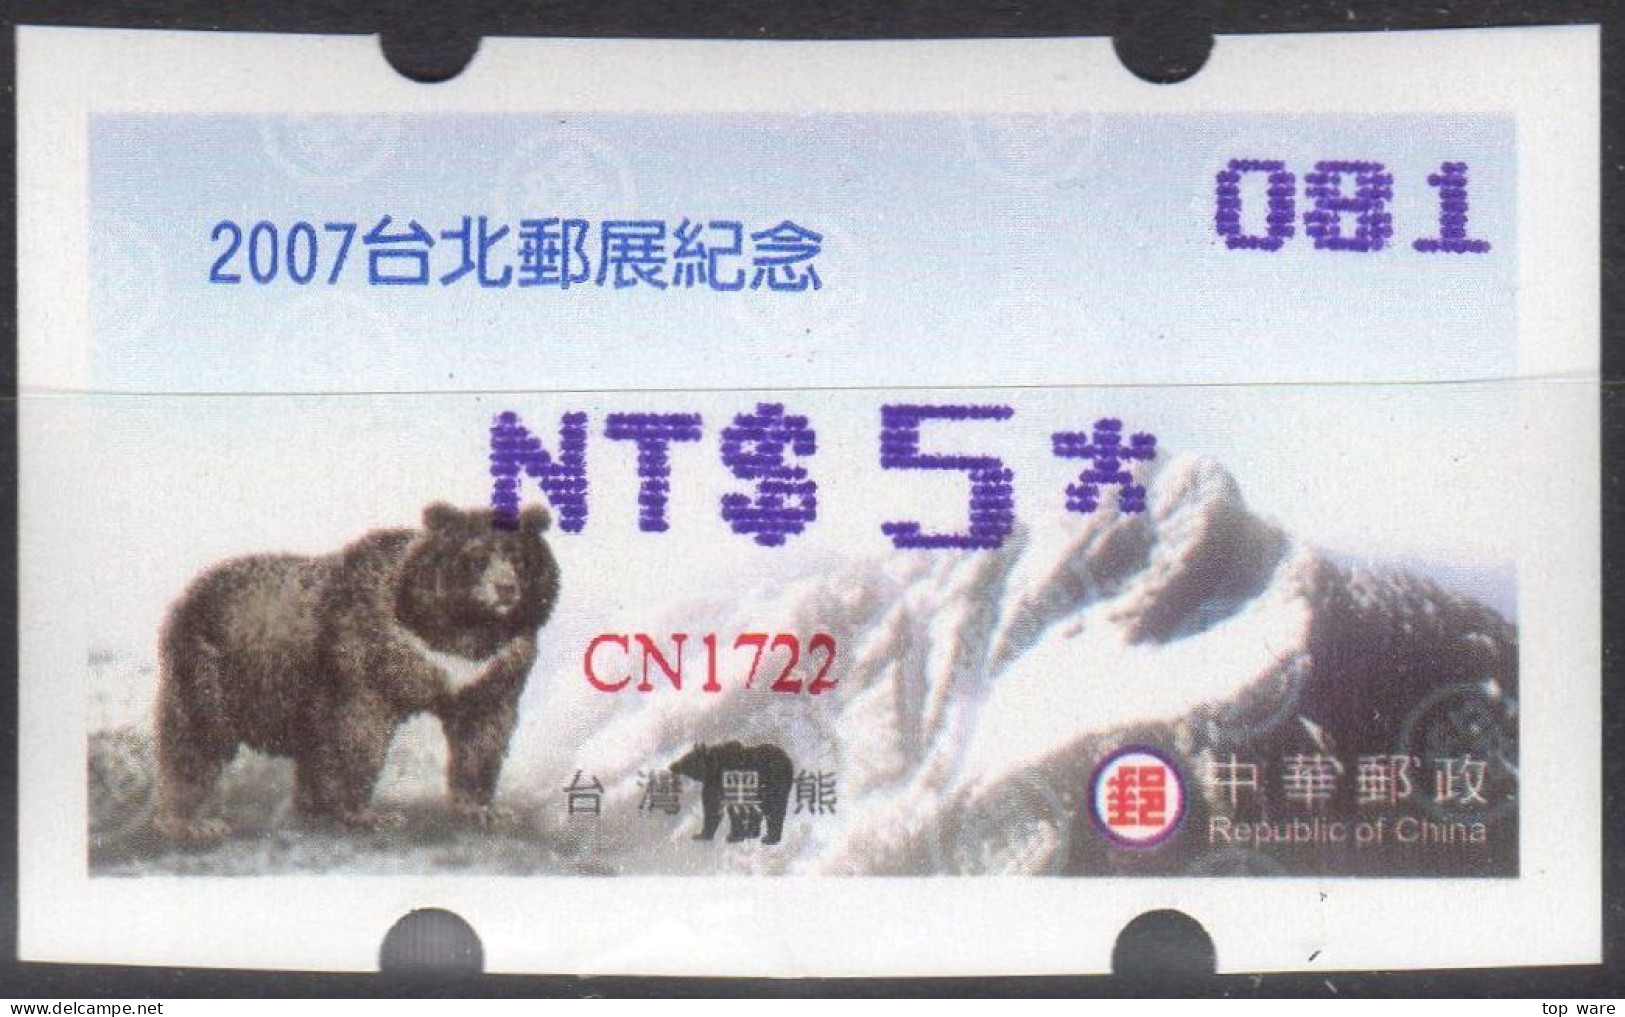 2007 Automatenmarken China Taiwan STAMPEX 2007 TAIPEI Bear MiNr.15 Blue Nr.081 ATM NT$5 Xx Innovision Kiosk Etiquetas - Distributors